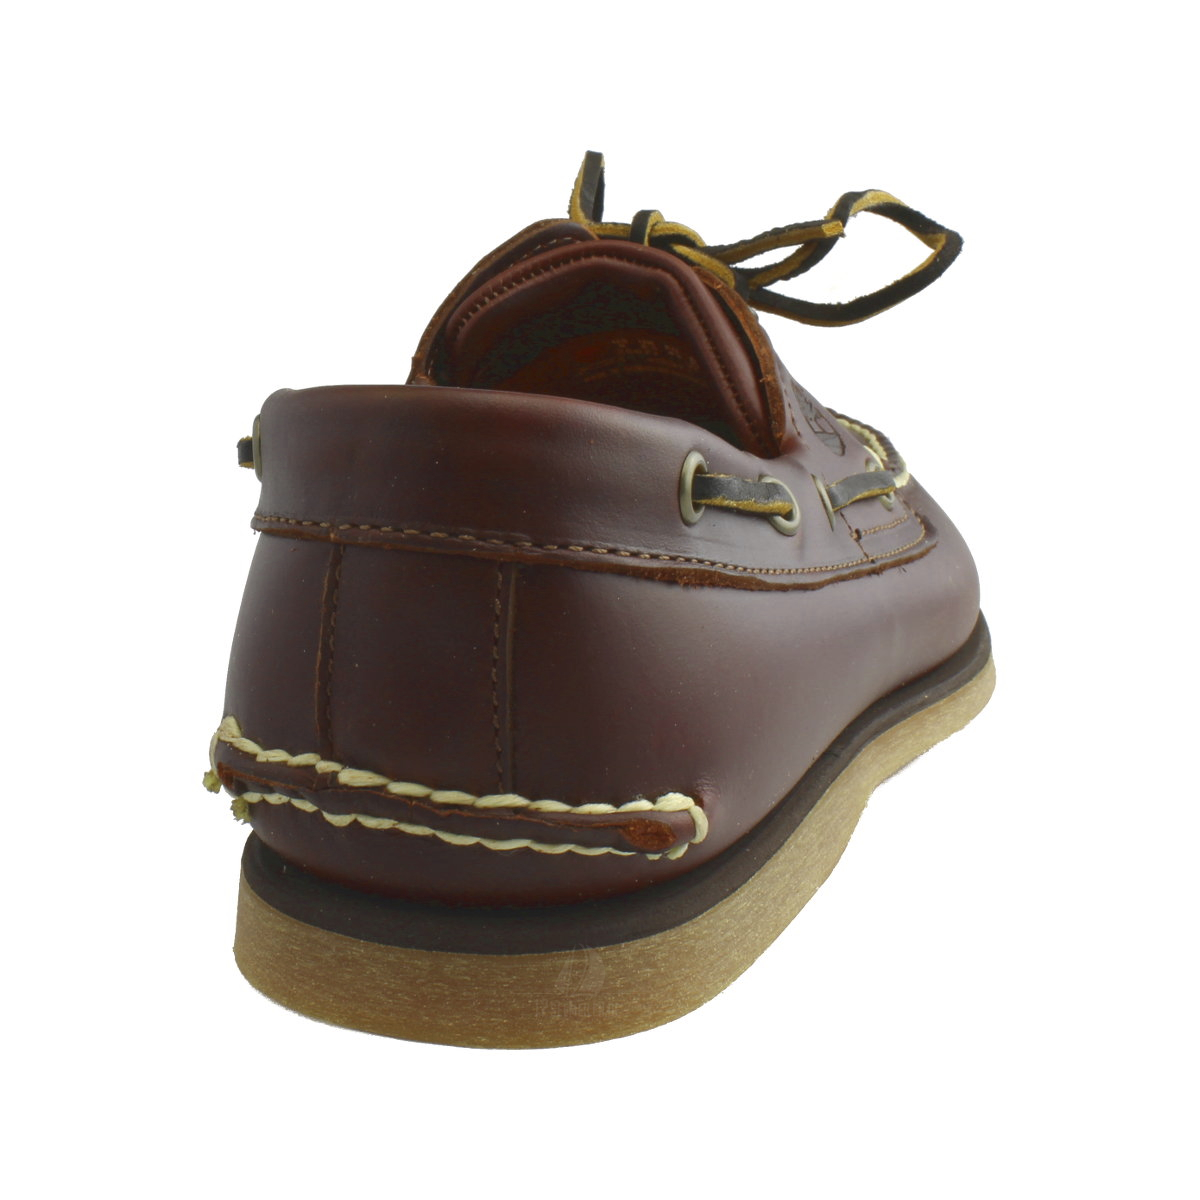 Timberland Classic Boat chaussures bateau Hommes brun - rouge eu 44 ( us 10 )